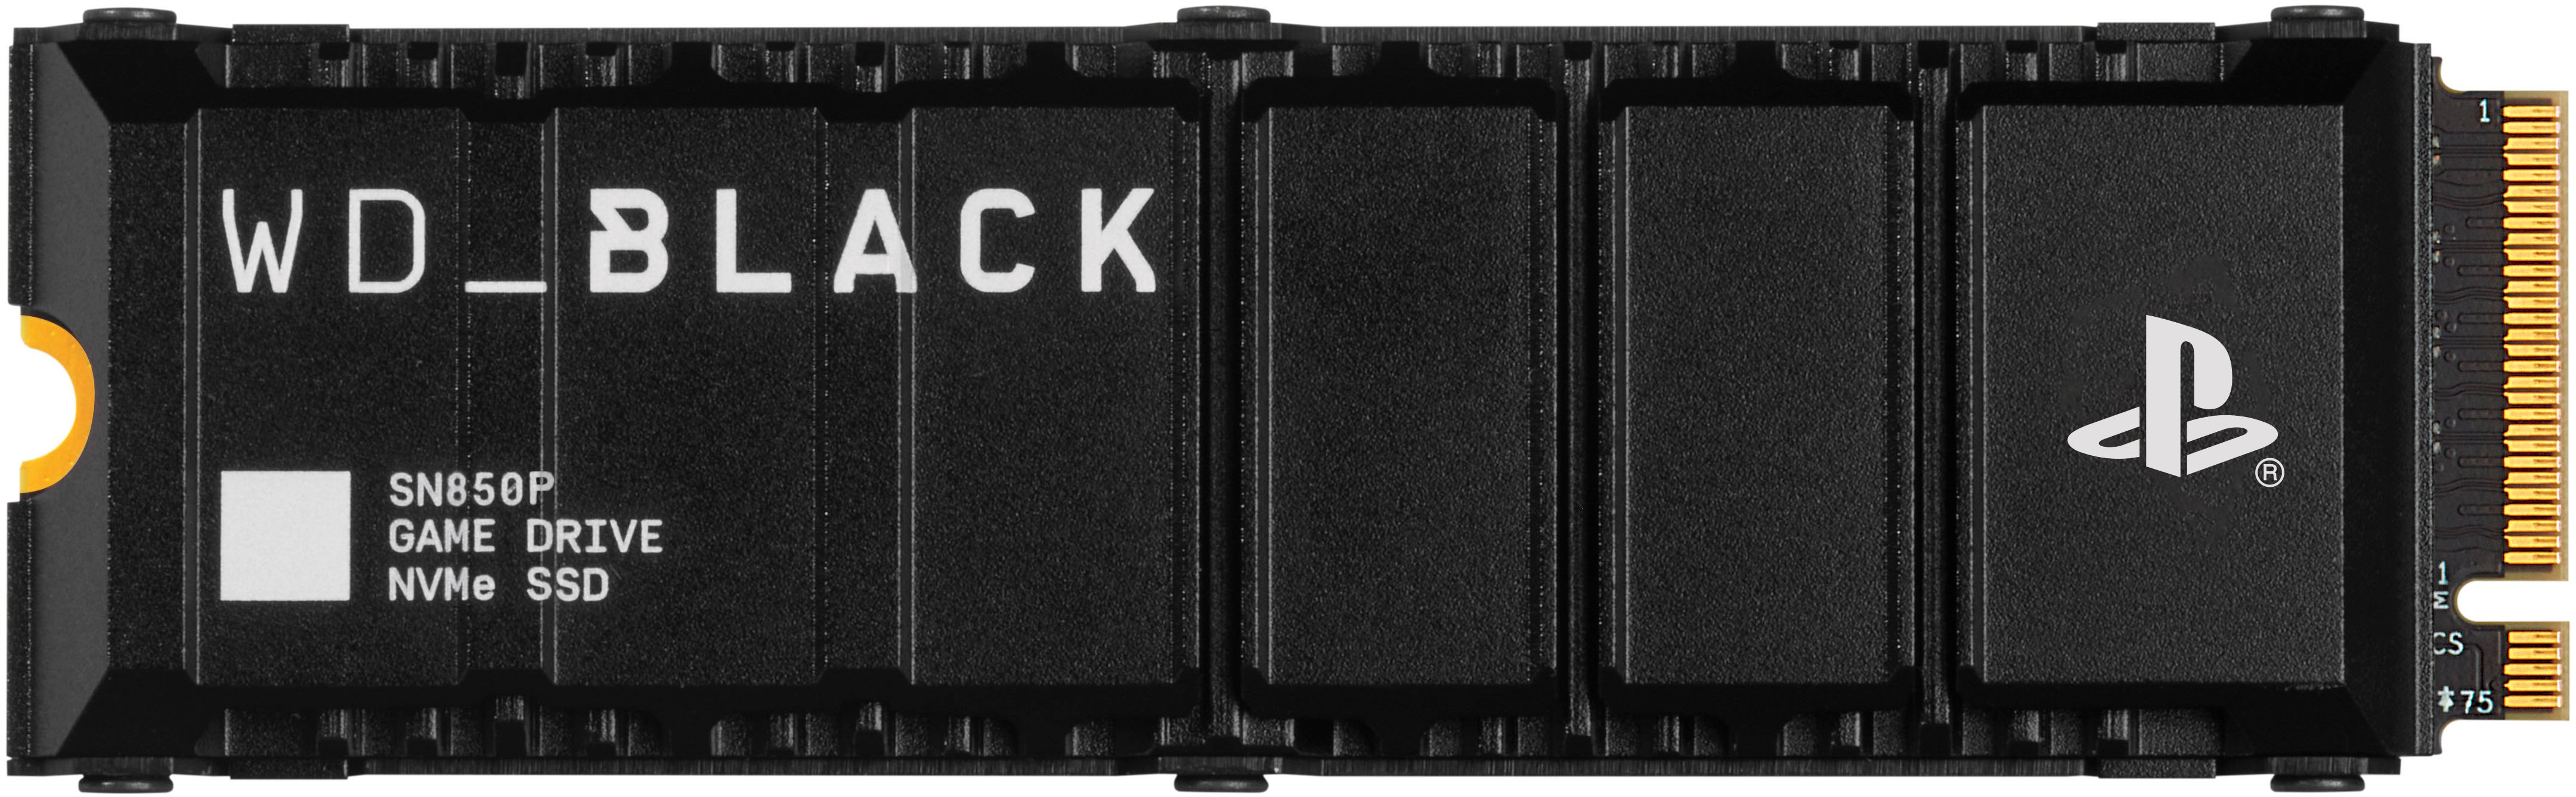 Tomat skipper salut WD BLACK SN850P 2TB Internal SSD PCIe Gen 4 x4 with Heatsink for PS5  WDBBYV0020BNC-WRSN - Best Buy